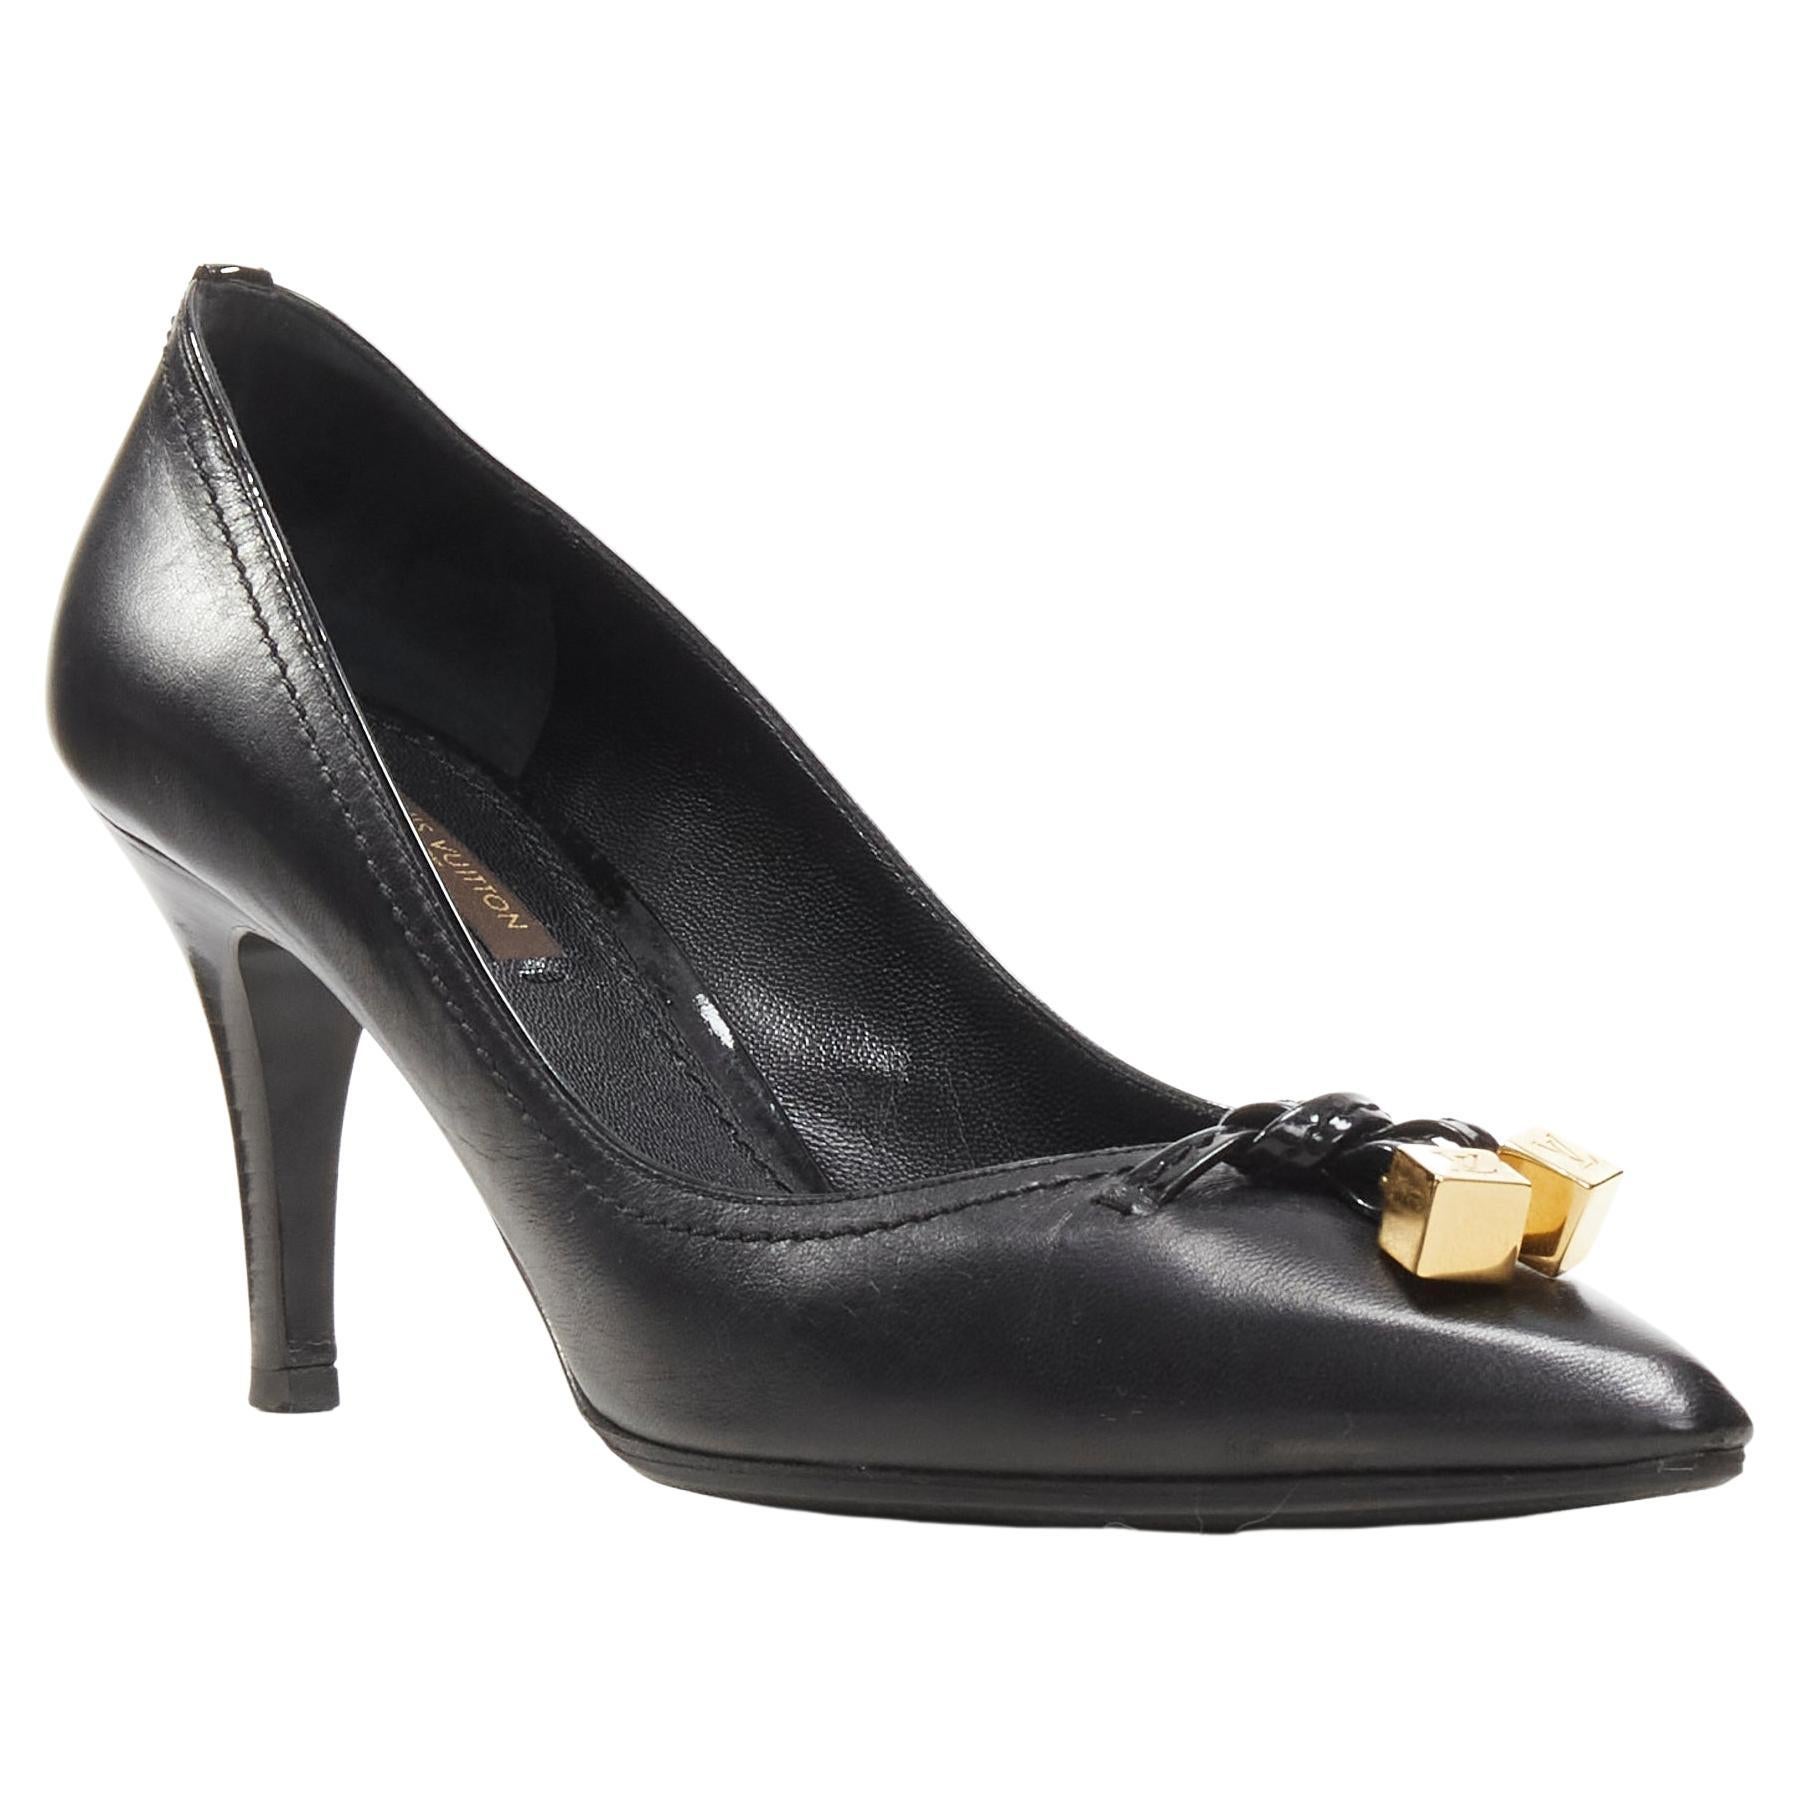 LOUIS VUITTON gold LV dice charm black leather mid heel pump EU36.5 For Sale